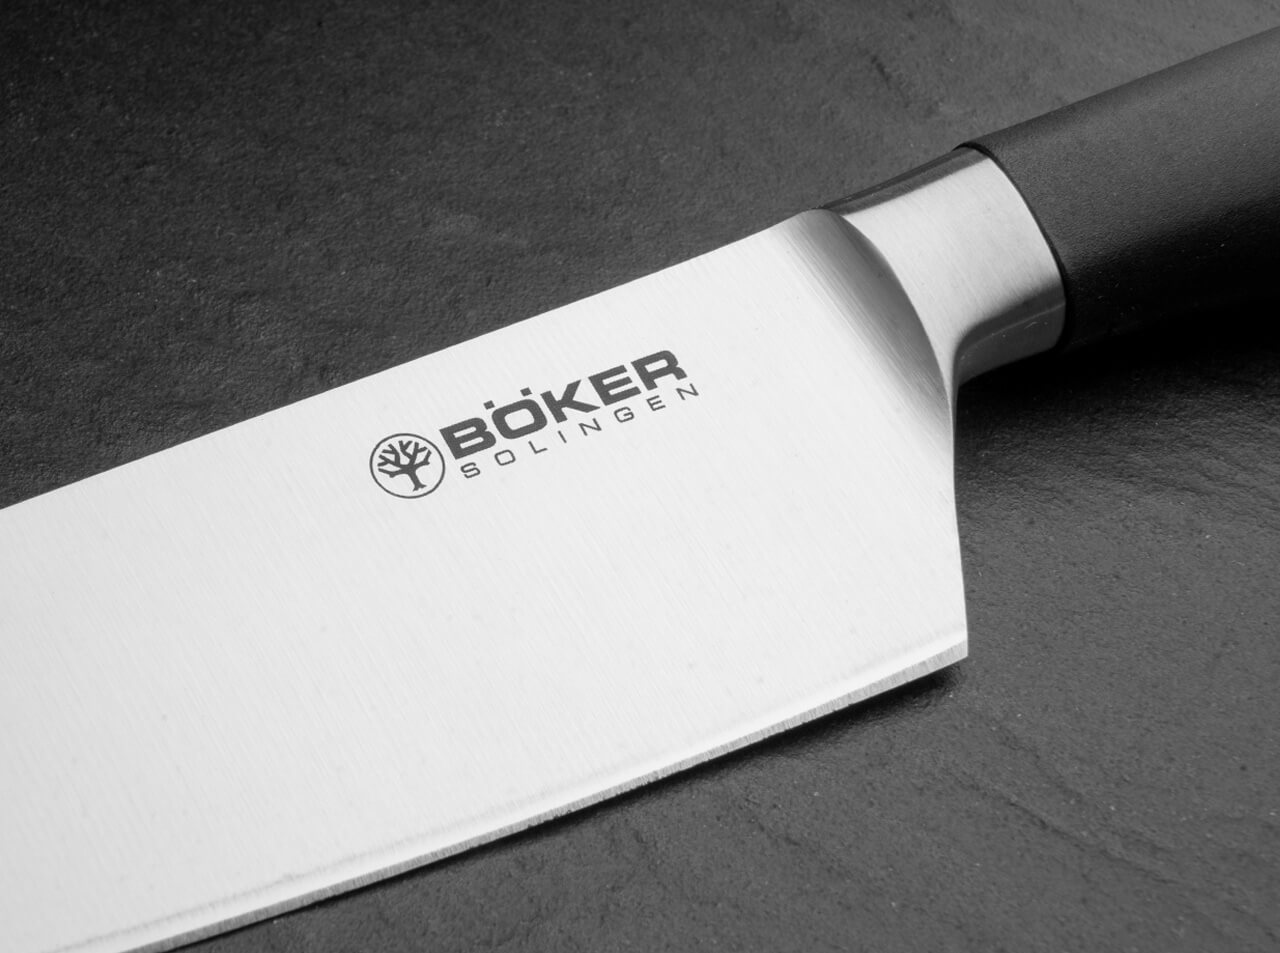 https://www.bokerusa.com/media/image/33/7d/7a/boeker-manufaktur-solingen-core-professional-chef-s-knife-small-130820_5.jpg